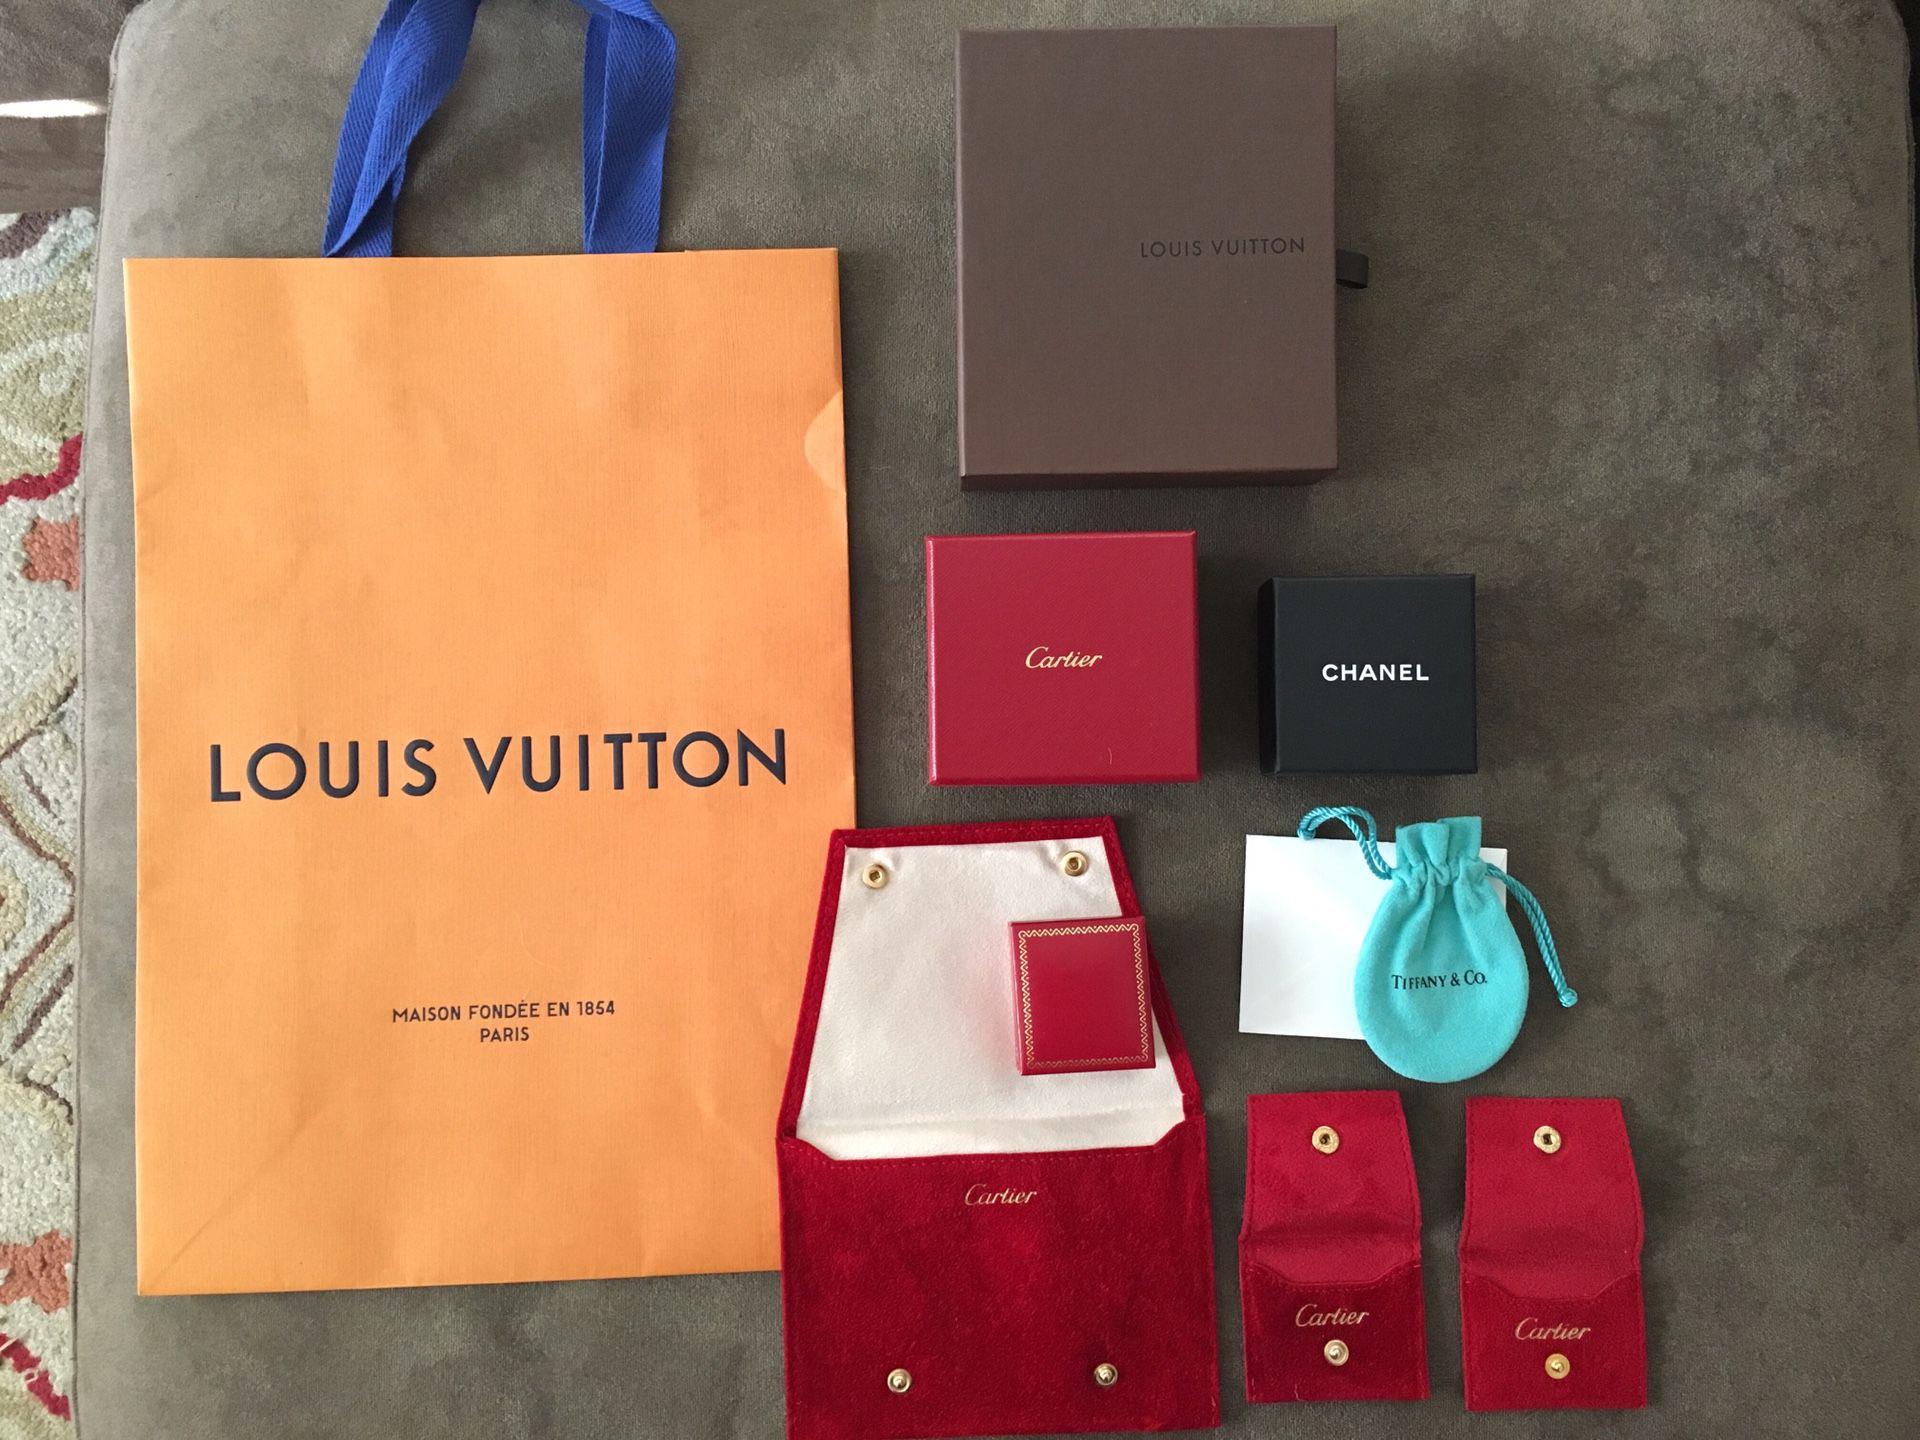 Designer Cartier Tiffany Chanel Louis Vuitton Bag Box and Pouches